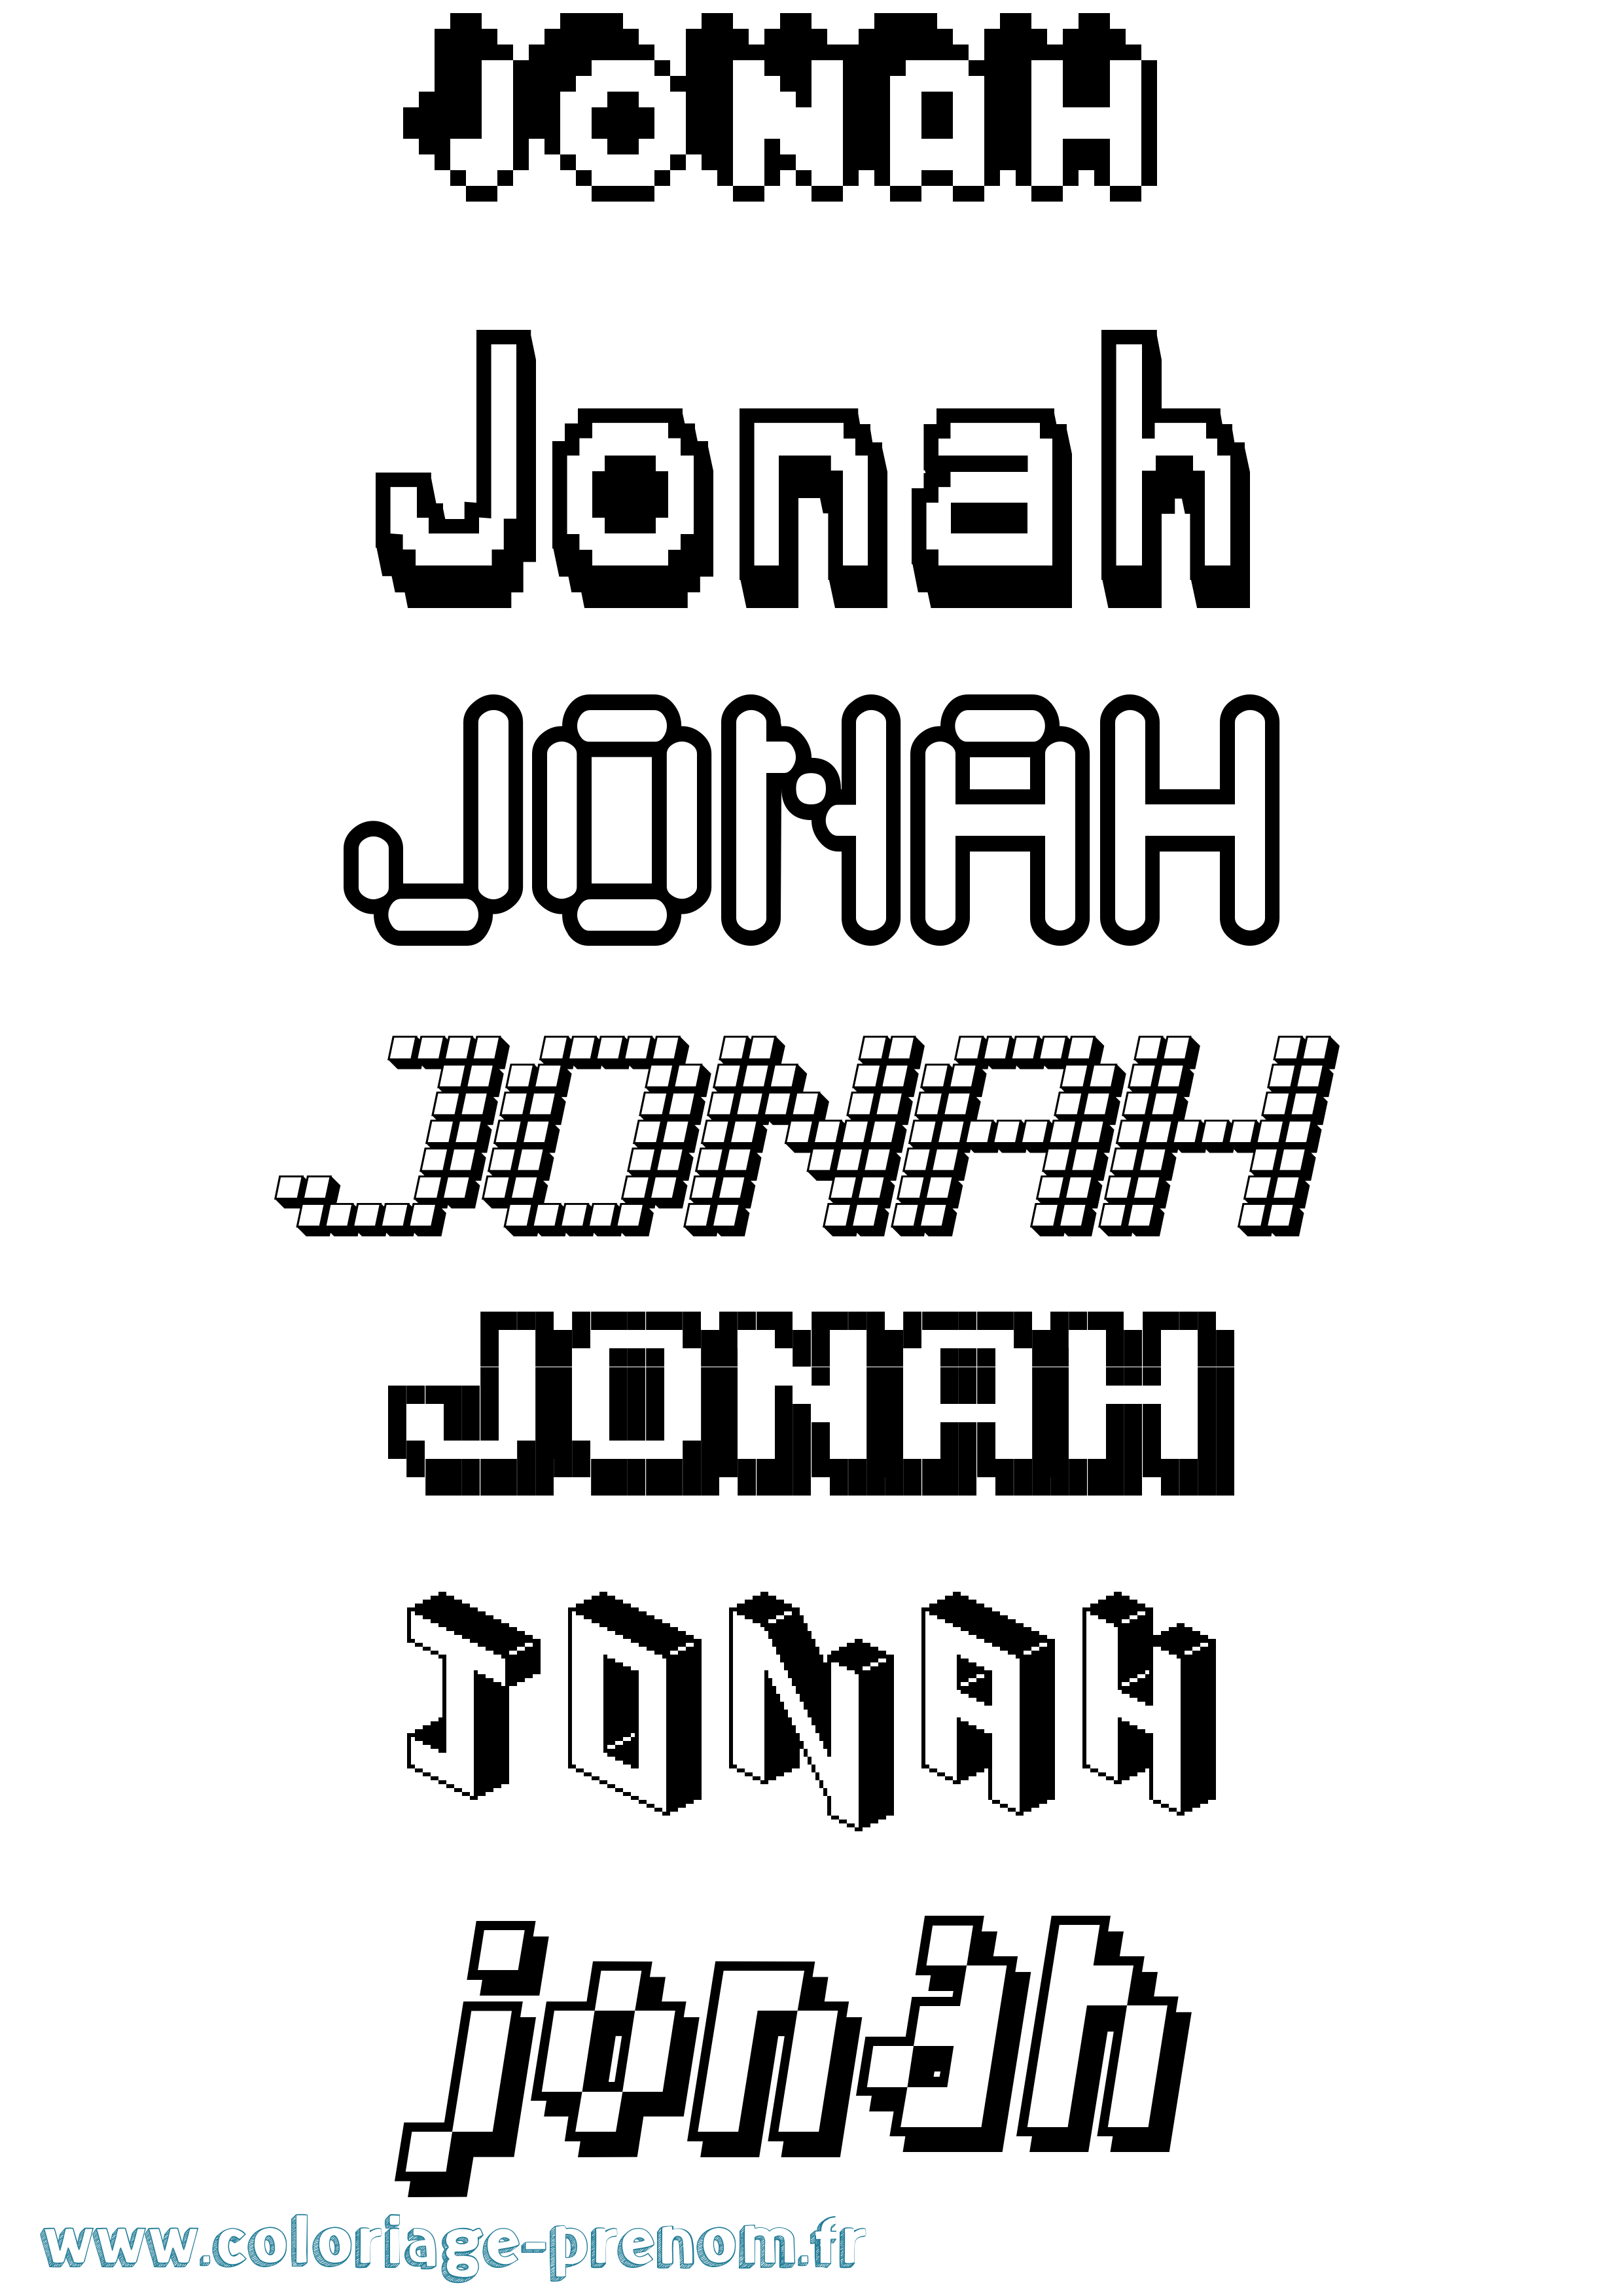 Coloriage prénom Jonah